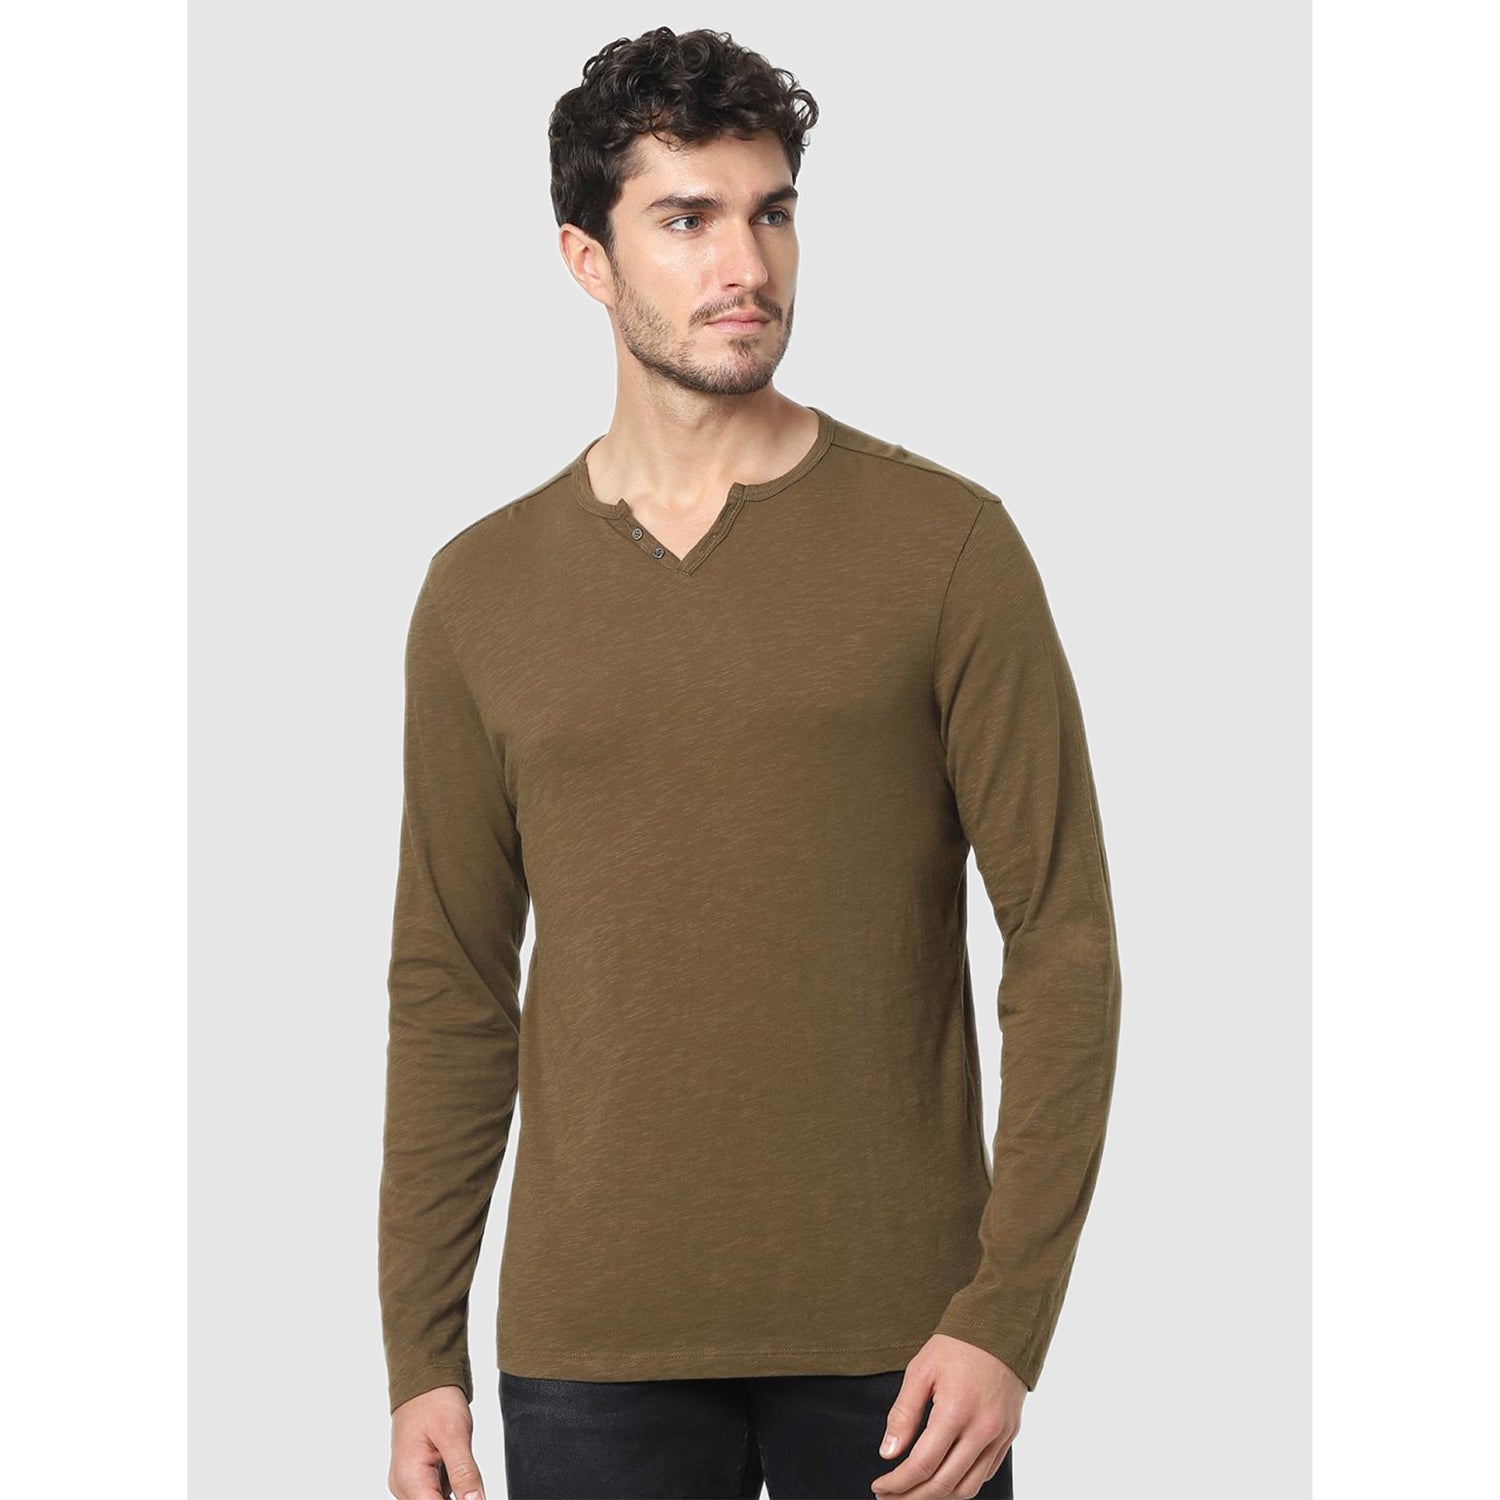 Men's Brown Solid T-shirt (Various Sizes)